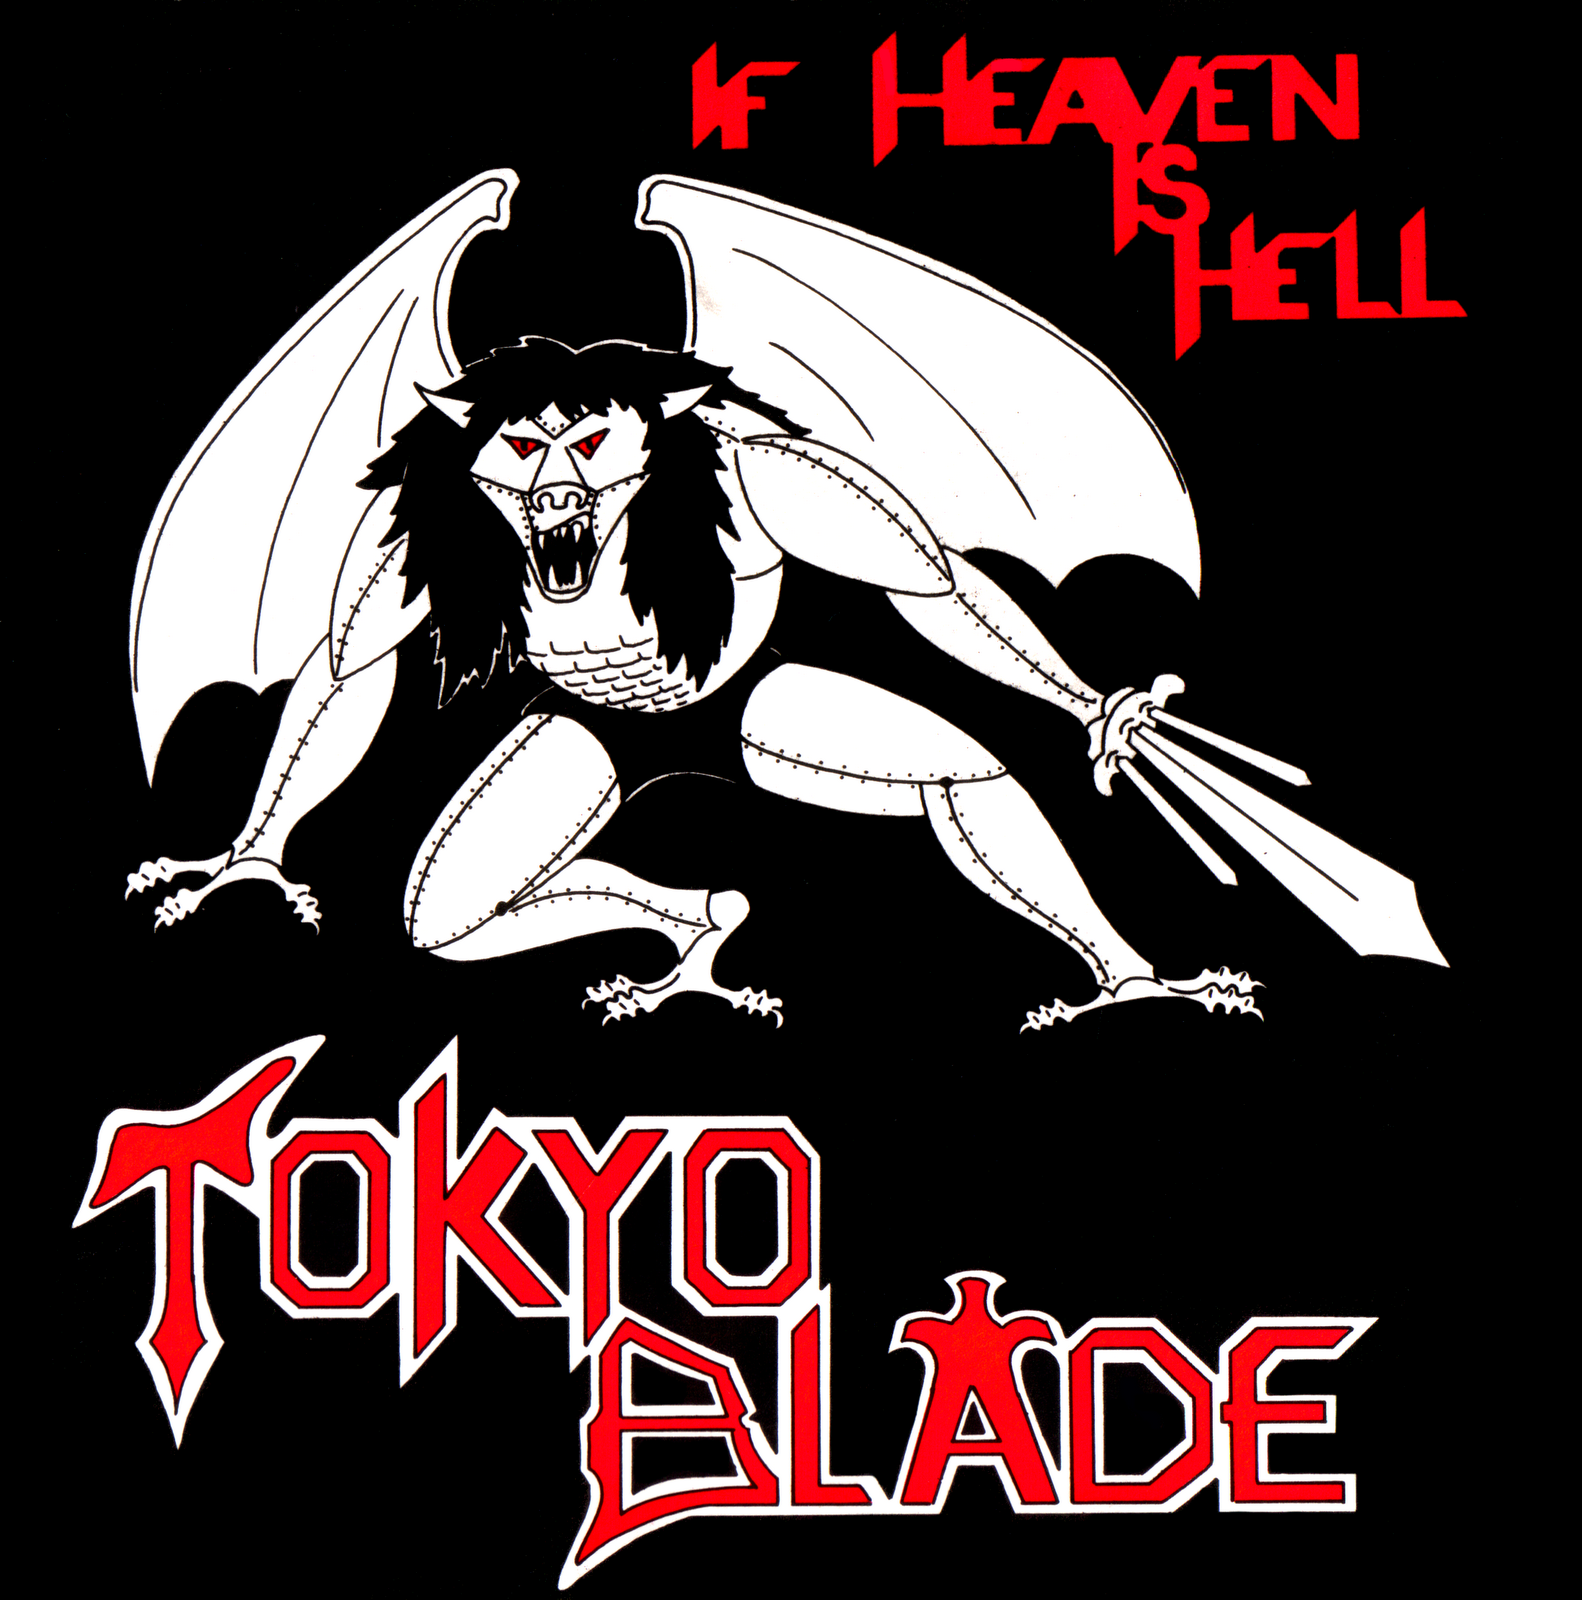 1983 - Tokyo Blade. Tokyo Blade 1983 Tokyo Blade. Tokyo Blade 2022. Tokyo Blade дискография. Хевен энд хелл